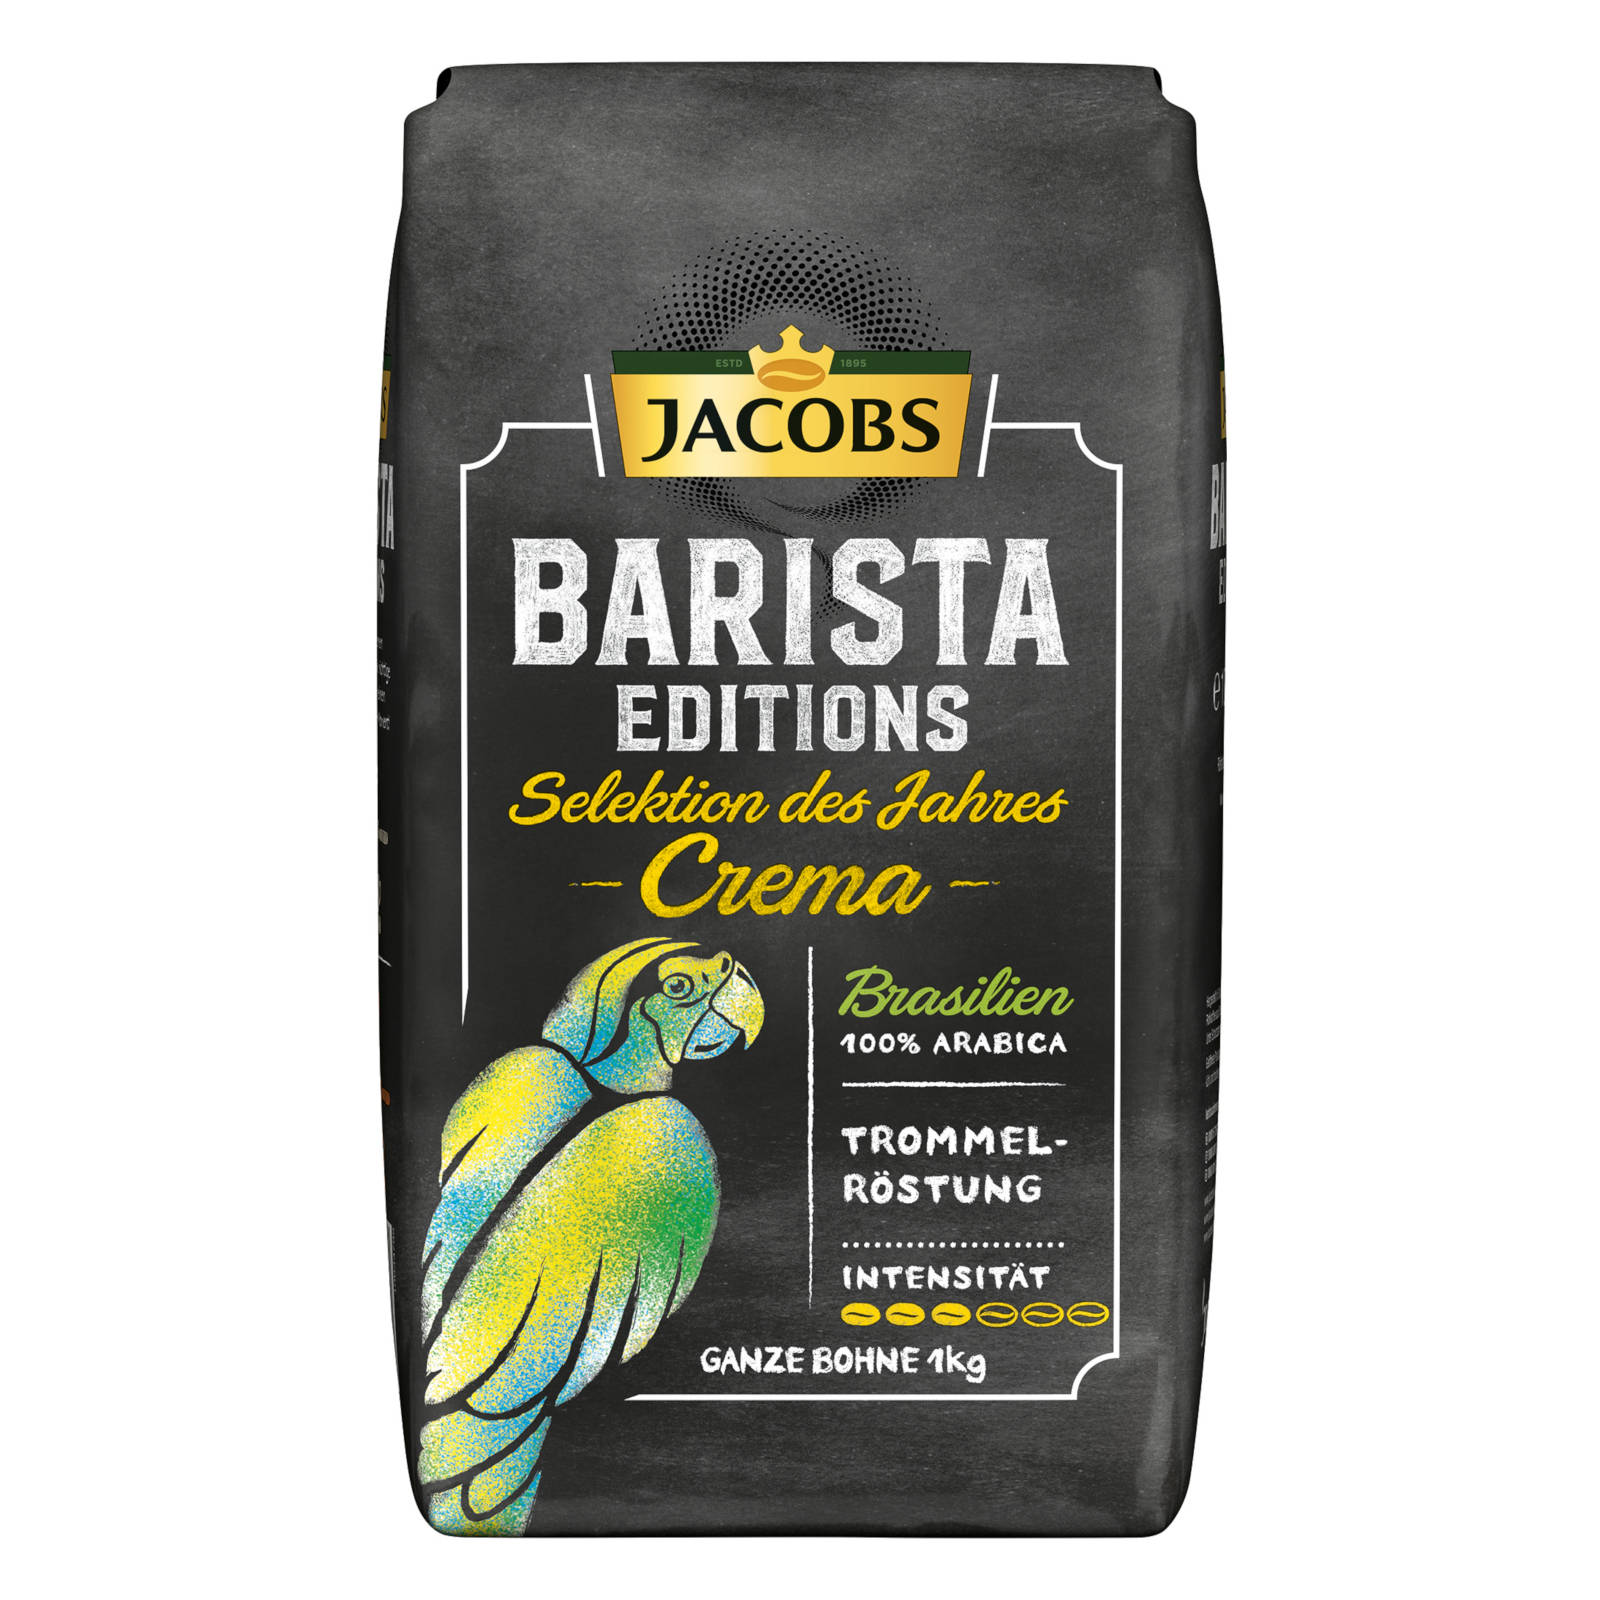 JACOBS (Kaffeevollautomat) x Selektion des Brasilien geröstete Jahres Barista ganze kg 1 4 Editions Kaffeebohnen